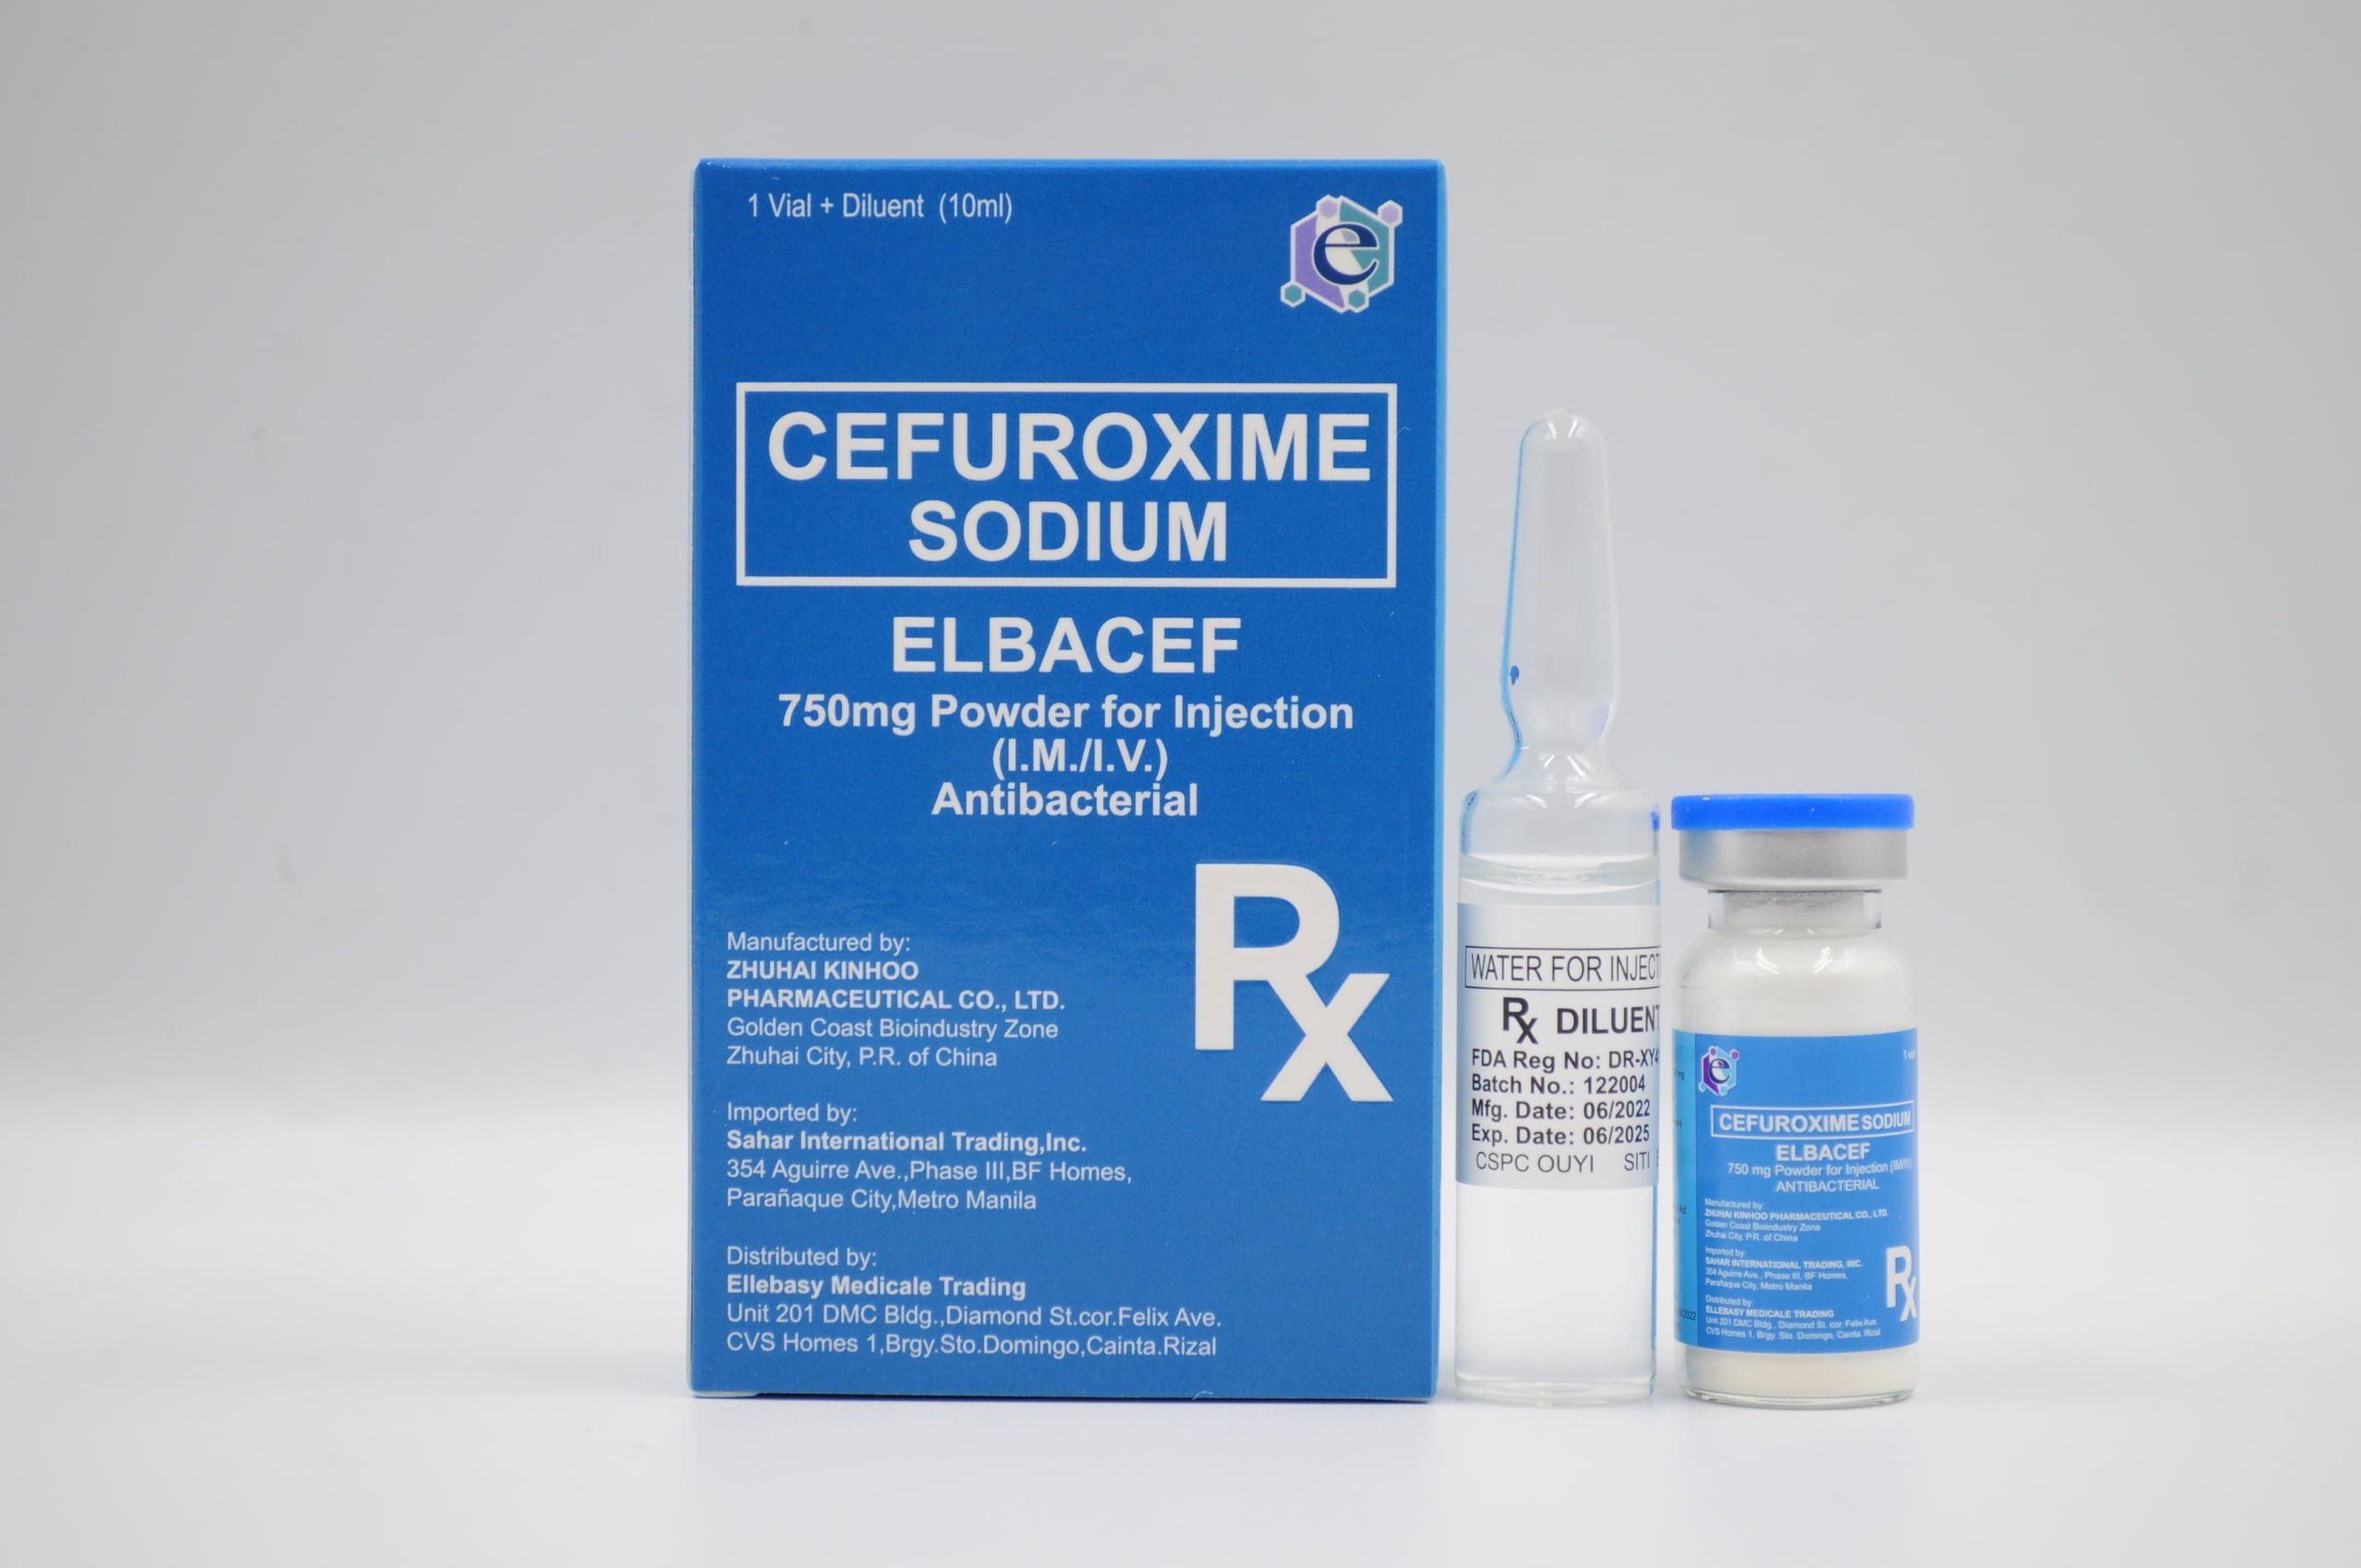 Cefuroxime as Sodium (Elbacef )